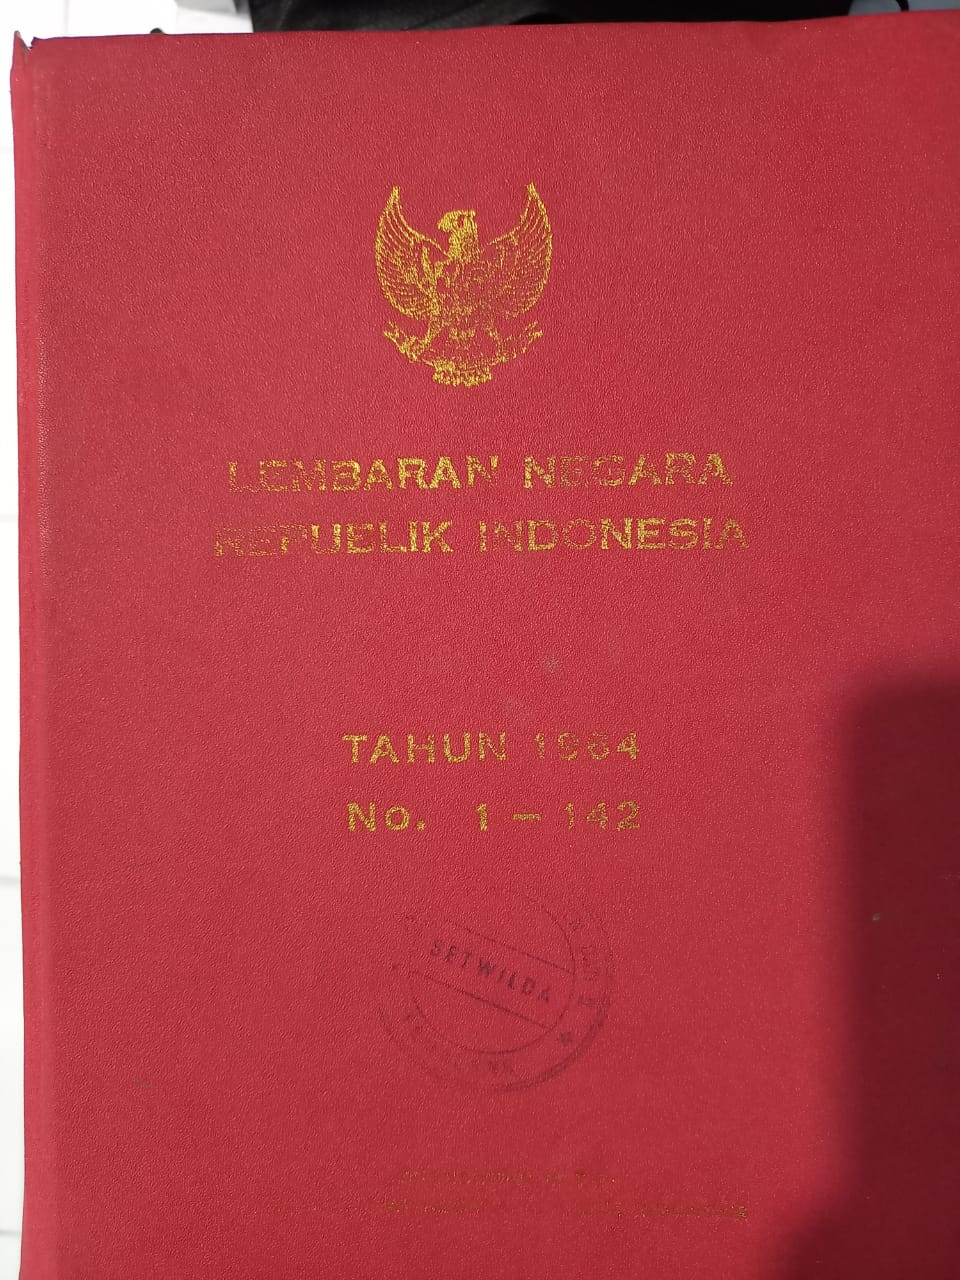 LEMBARAN NEGARA REPUBLIK INDONESIA TAHUN 1964 NO. 1 -142